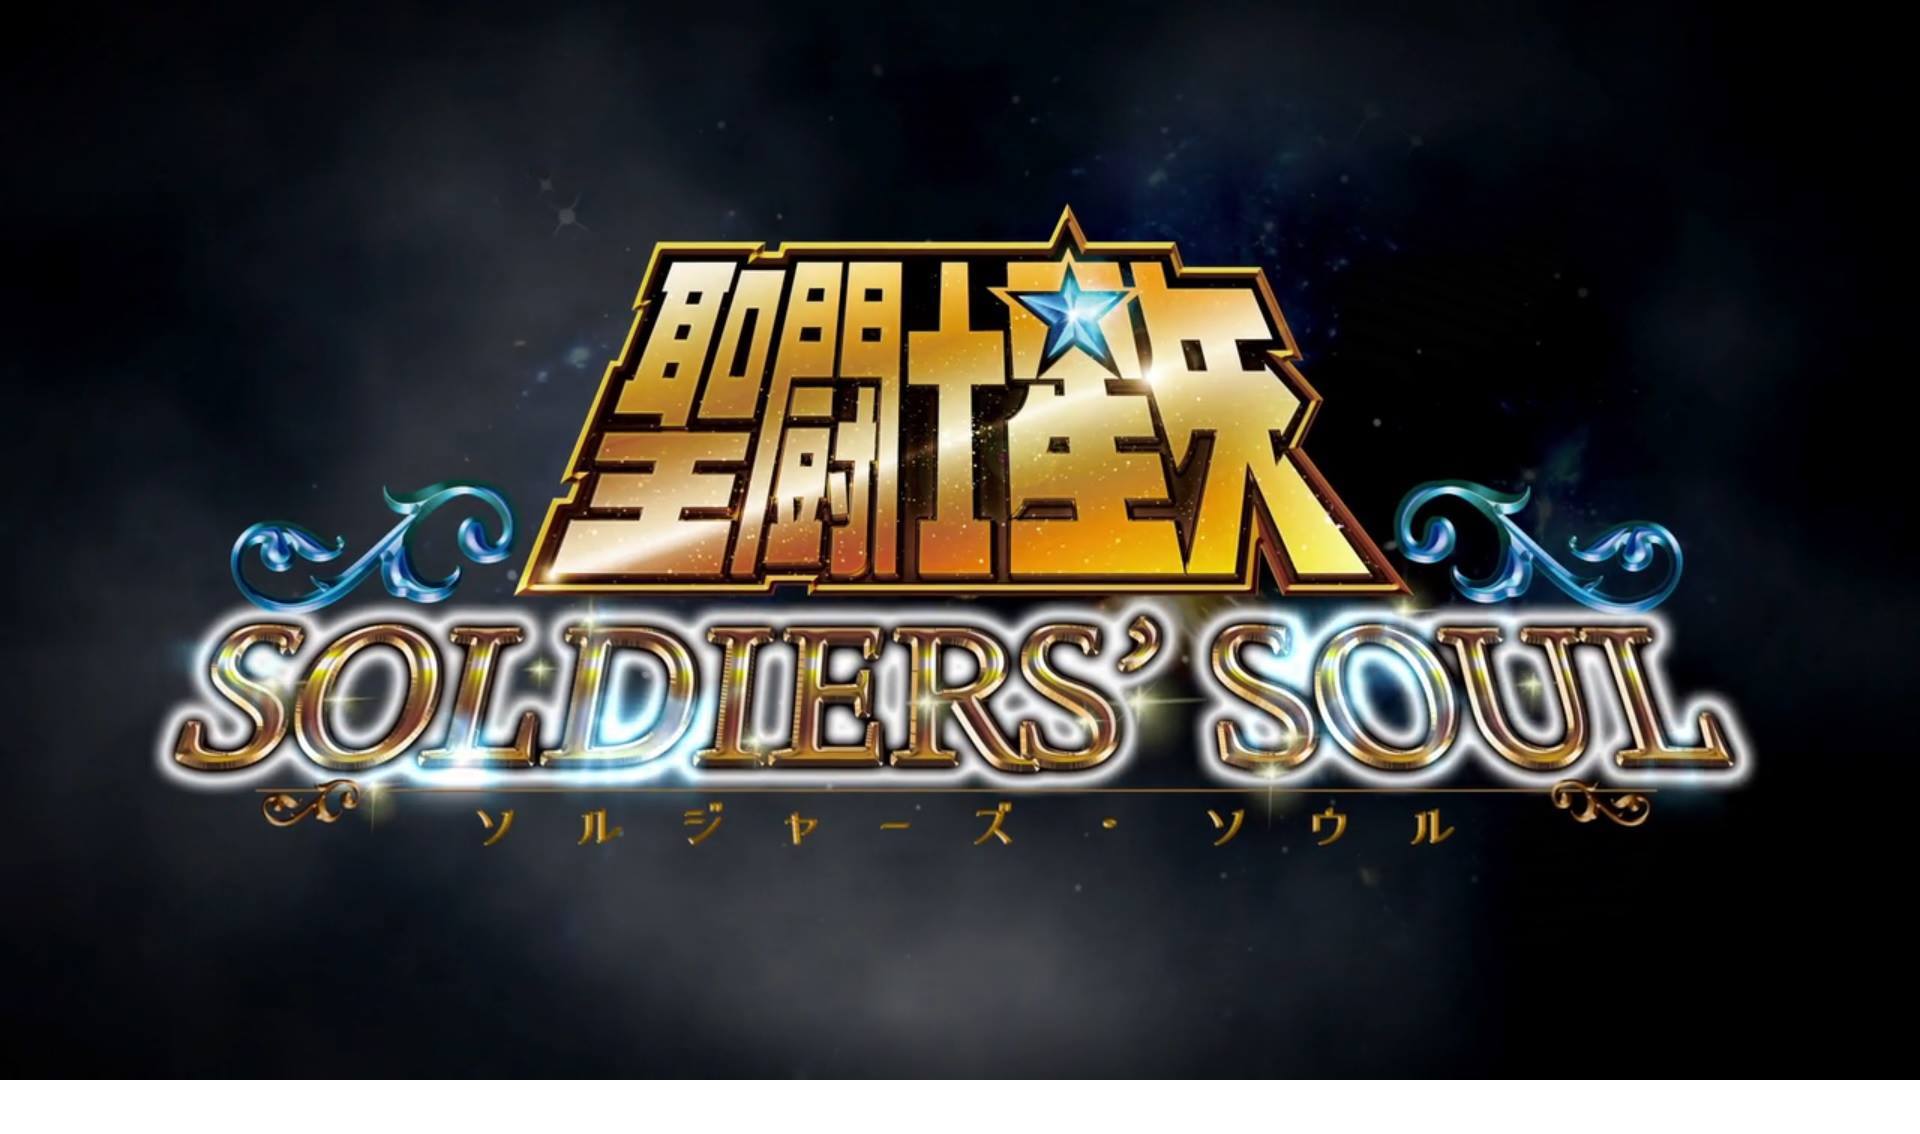 [Multi] Saint Seiya Soldiers Soul 9xmx